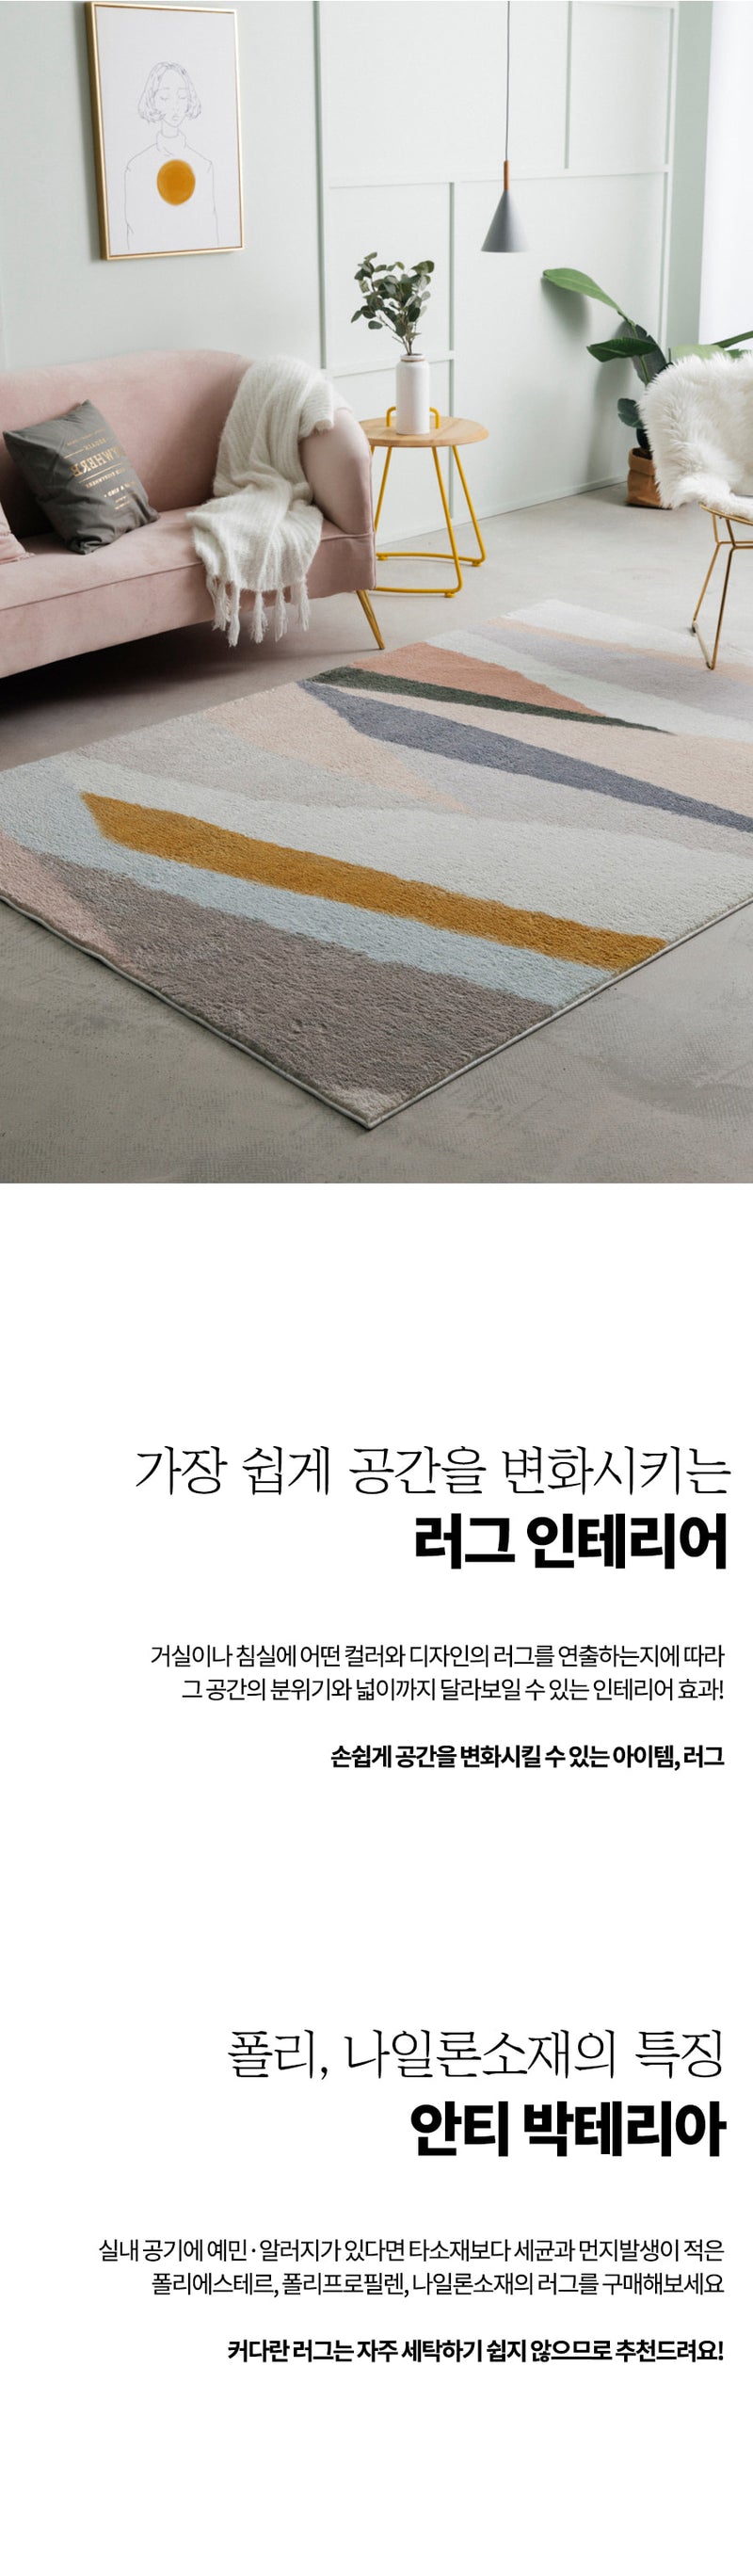 Shine and interior rug